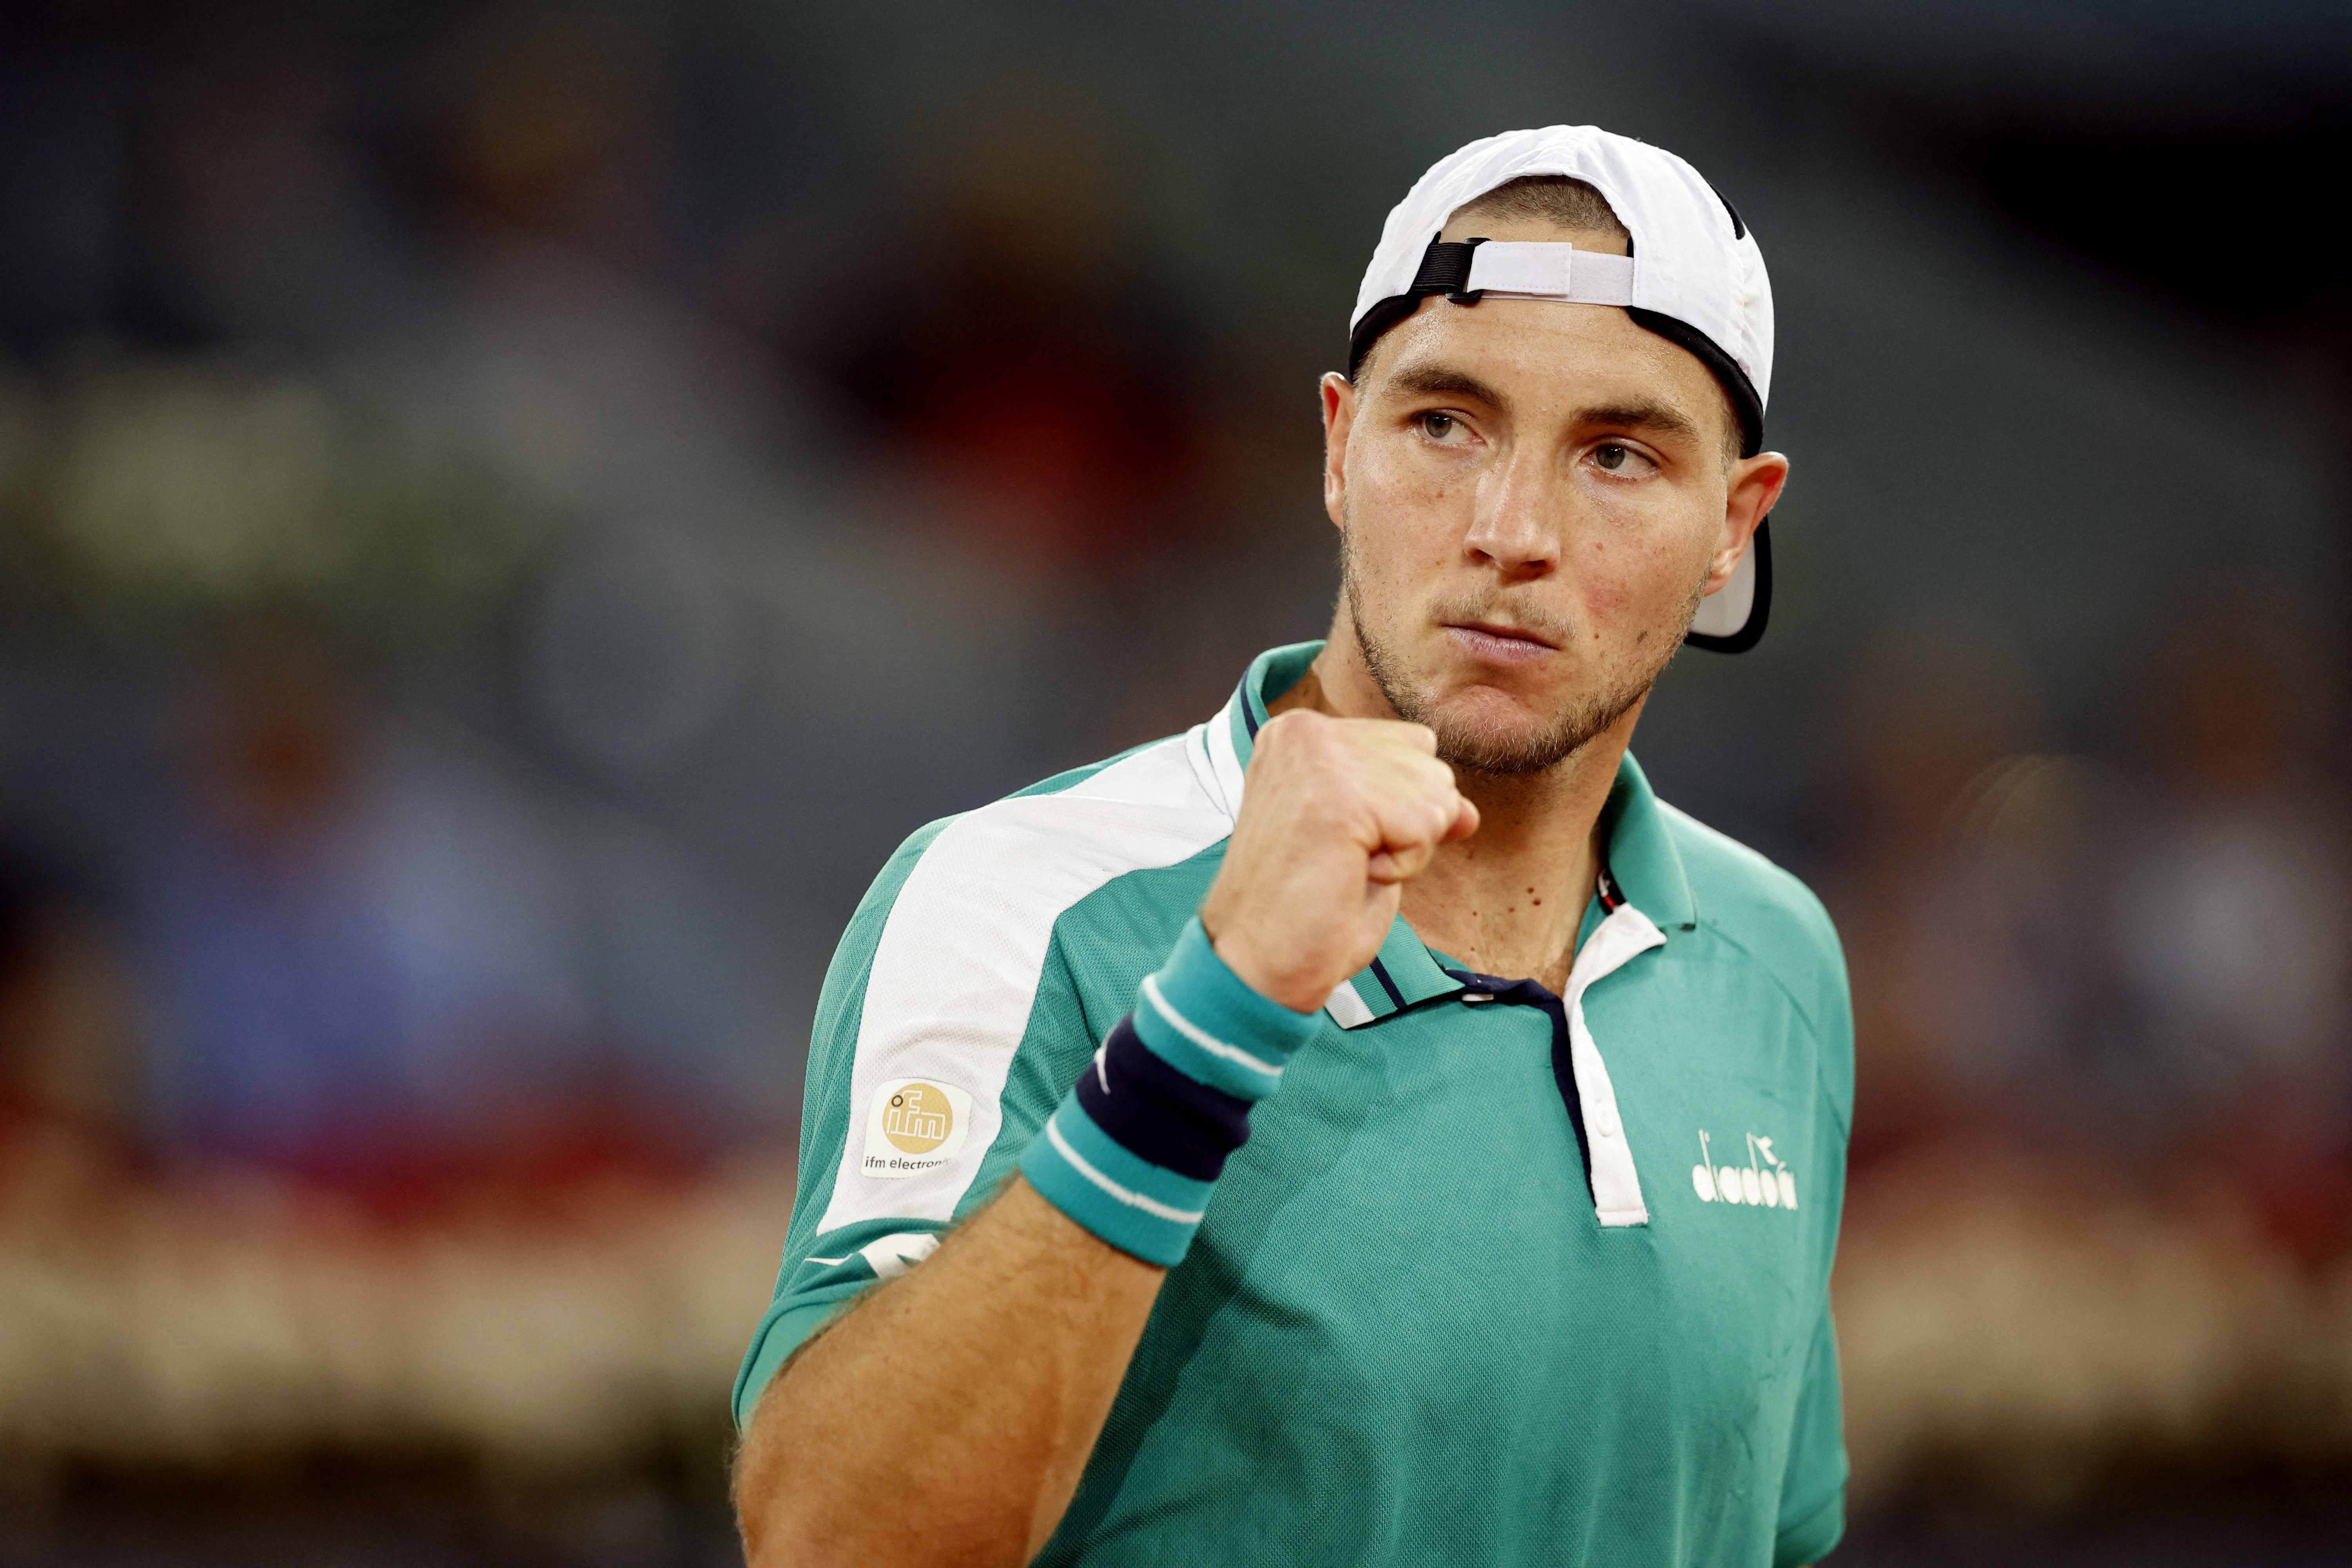 Mutua Madrid Open draw revealed – Novak Djokovic